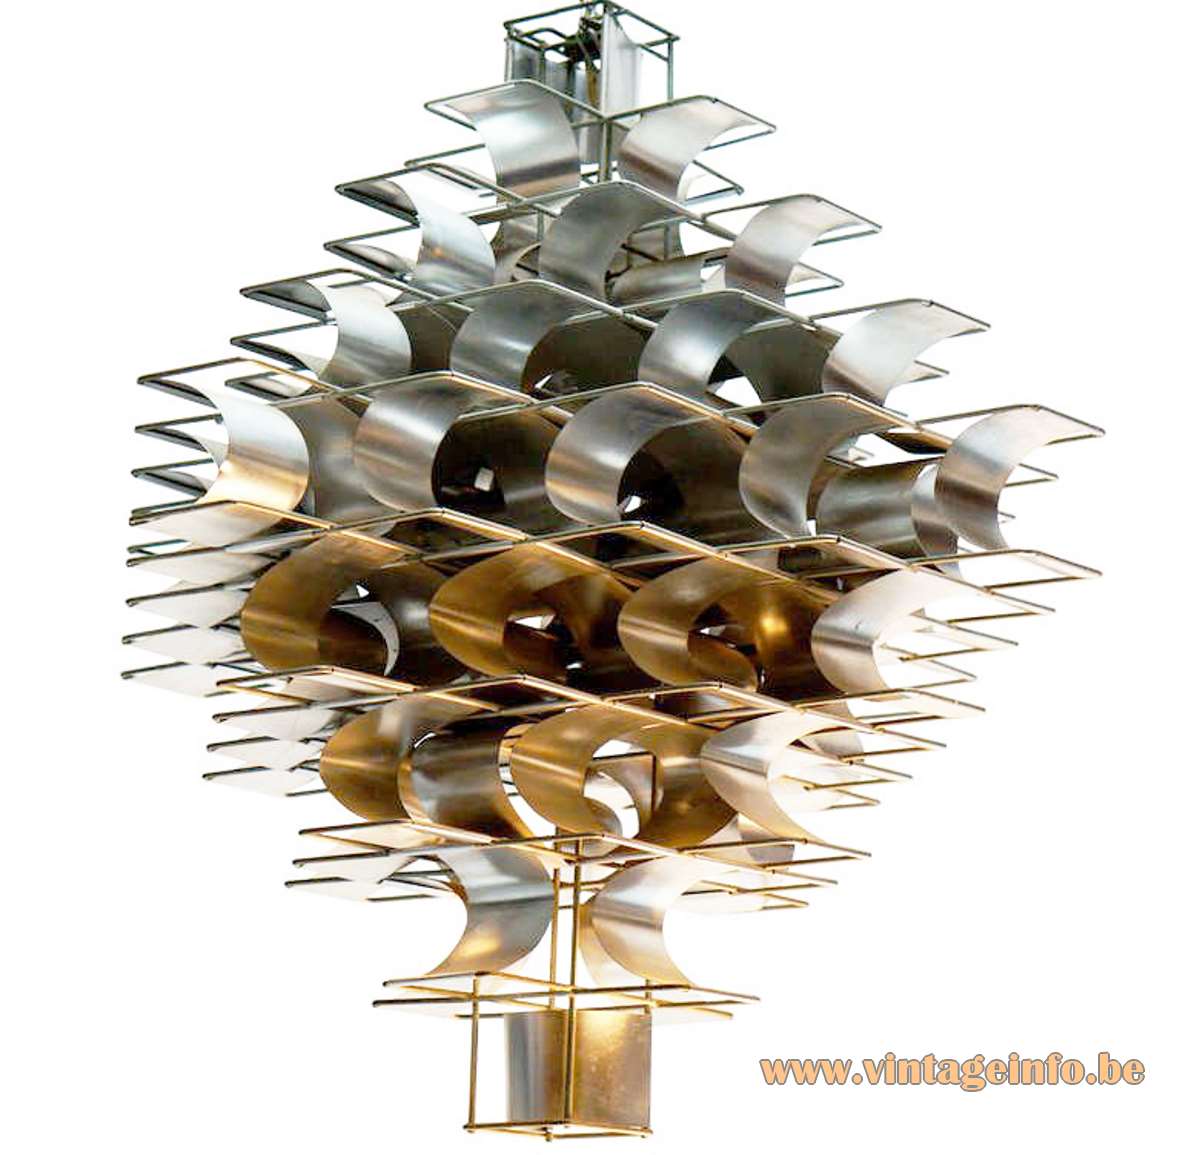 Max Sauze Cassiopé pendant lamp 1970s design curved folded aluminium slats metal iron wire frame France 